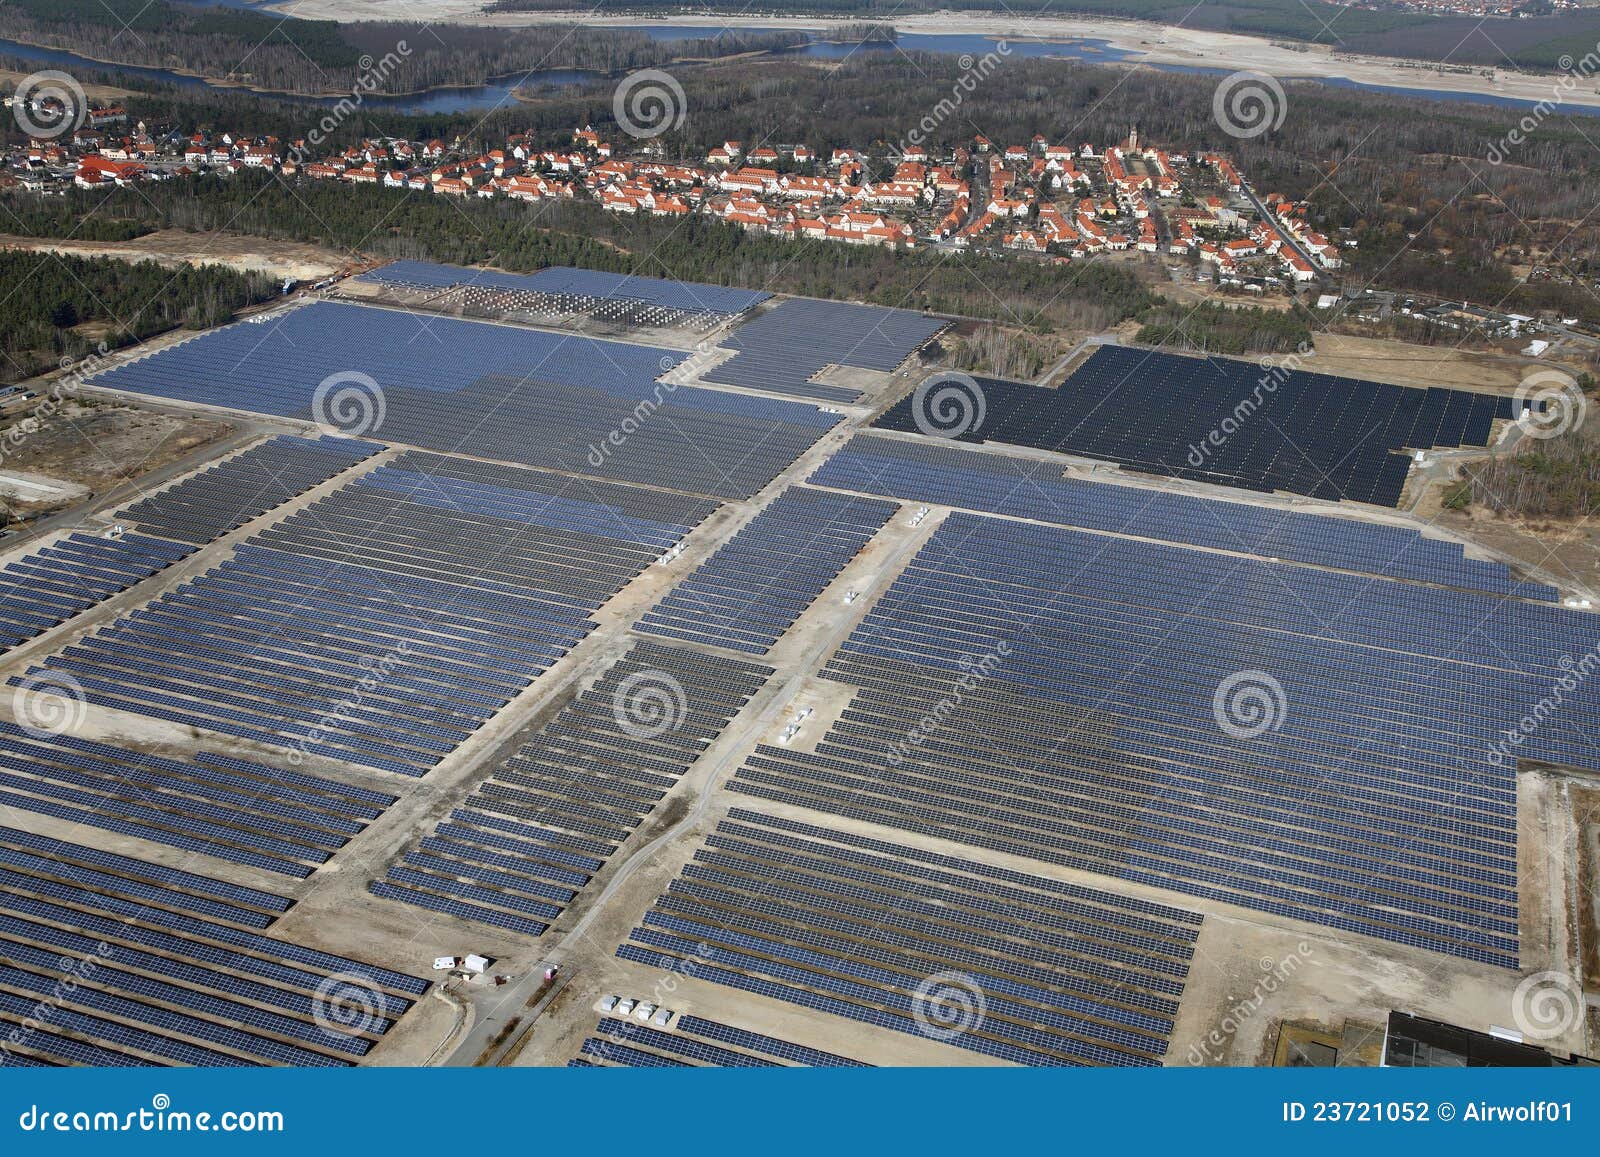 solar collector field